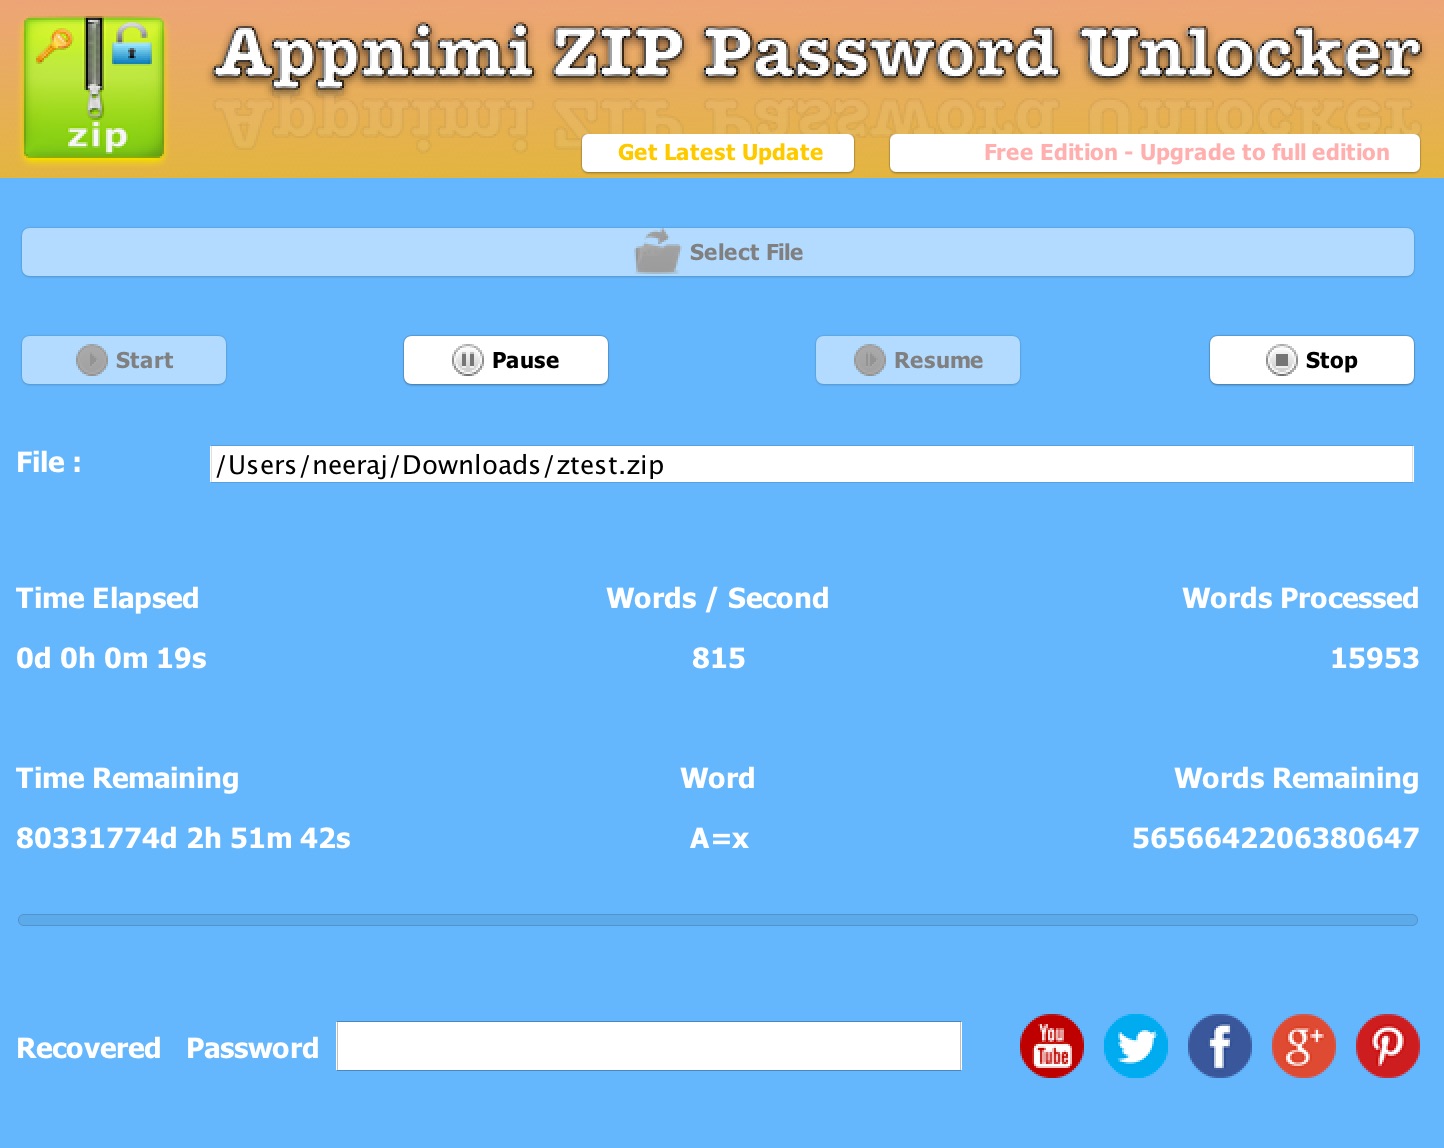 Sims 3 Expansions Installer Zip Password